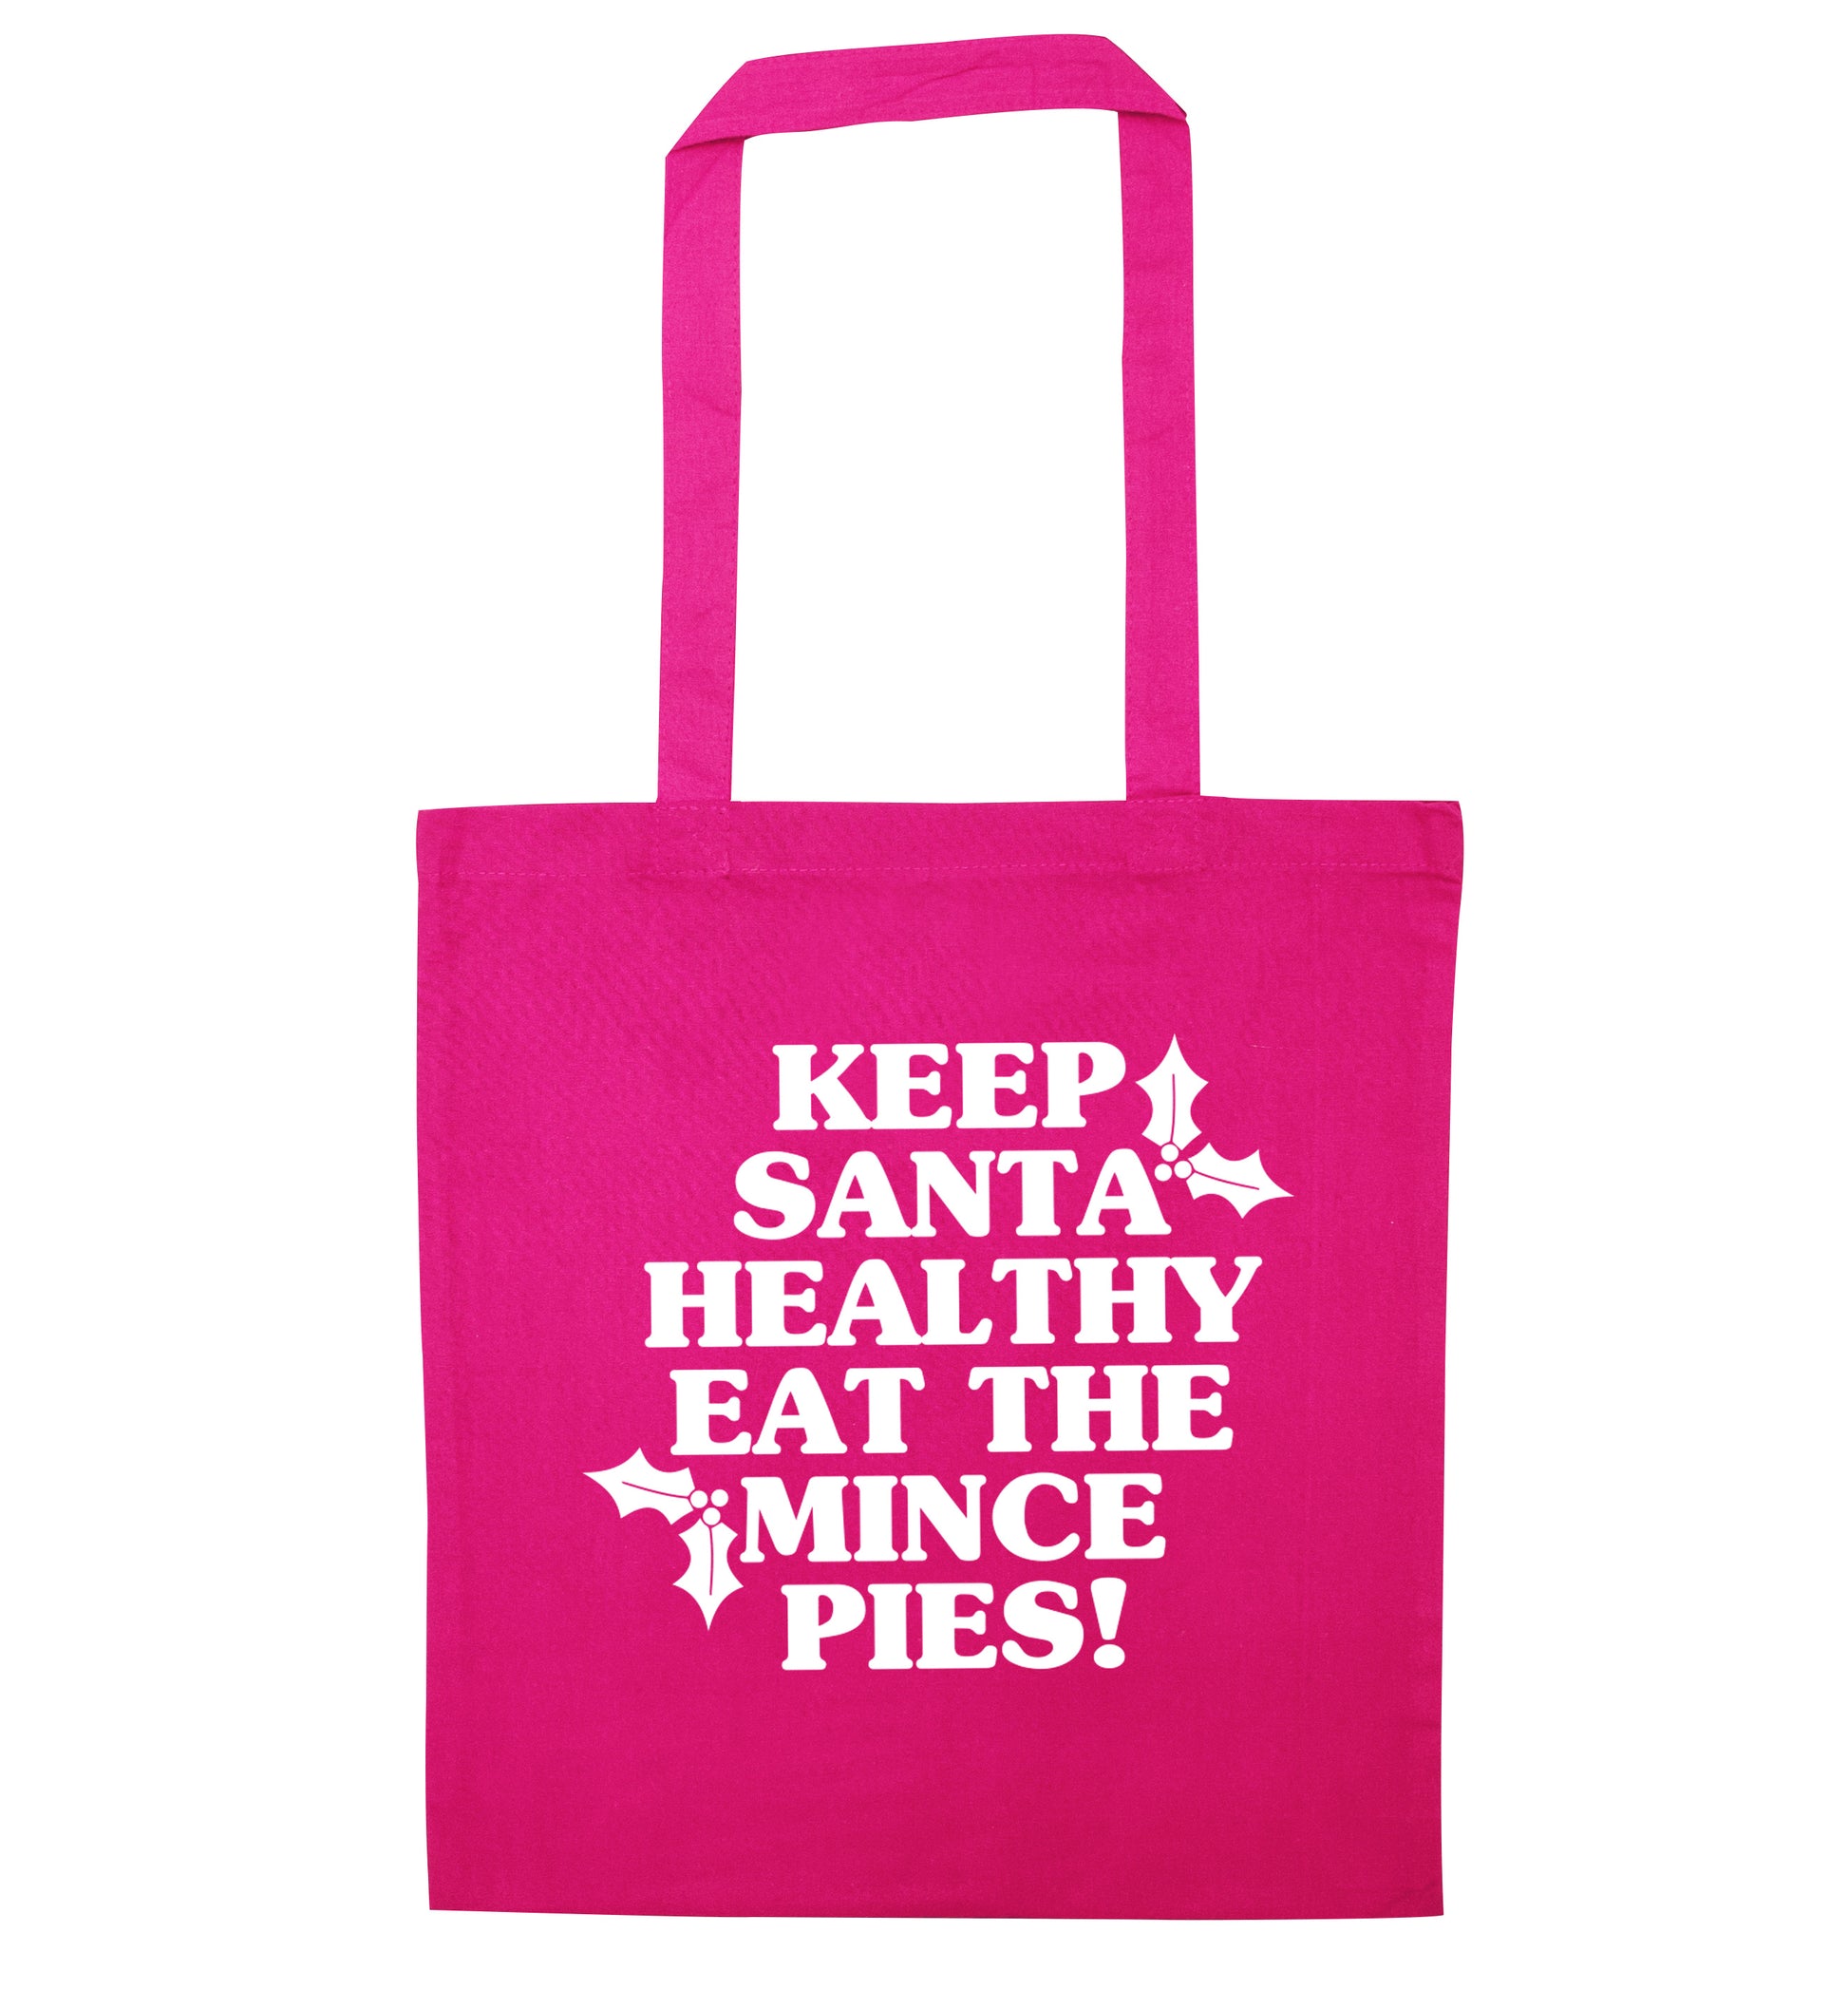 Keep santa healthy eat the mince pies pink tote bag